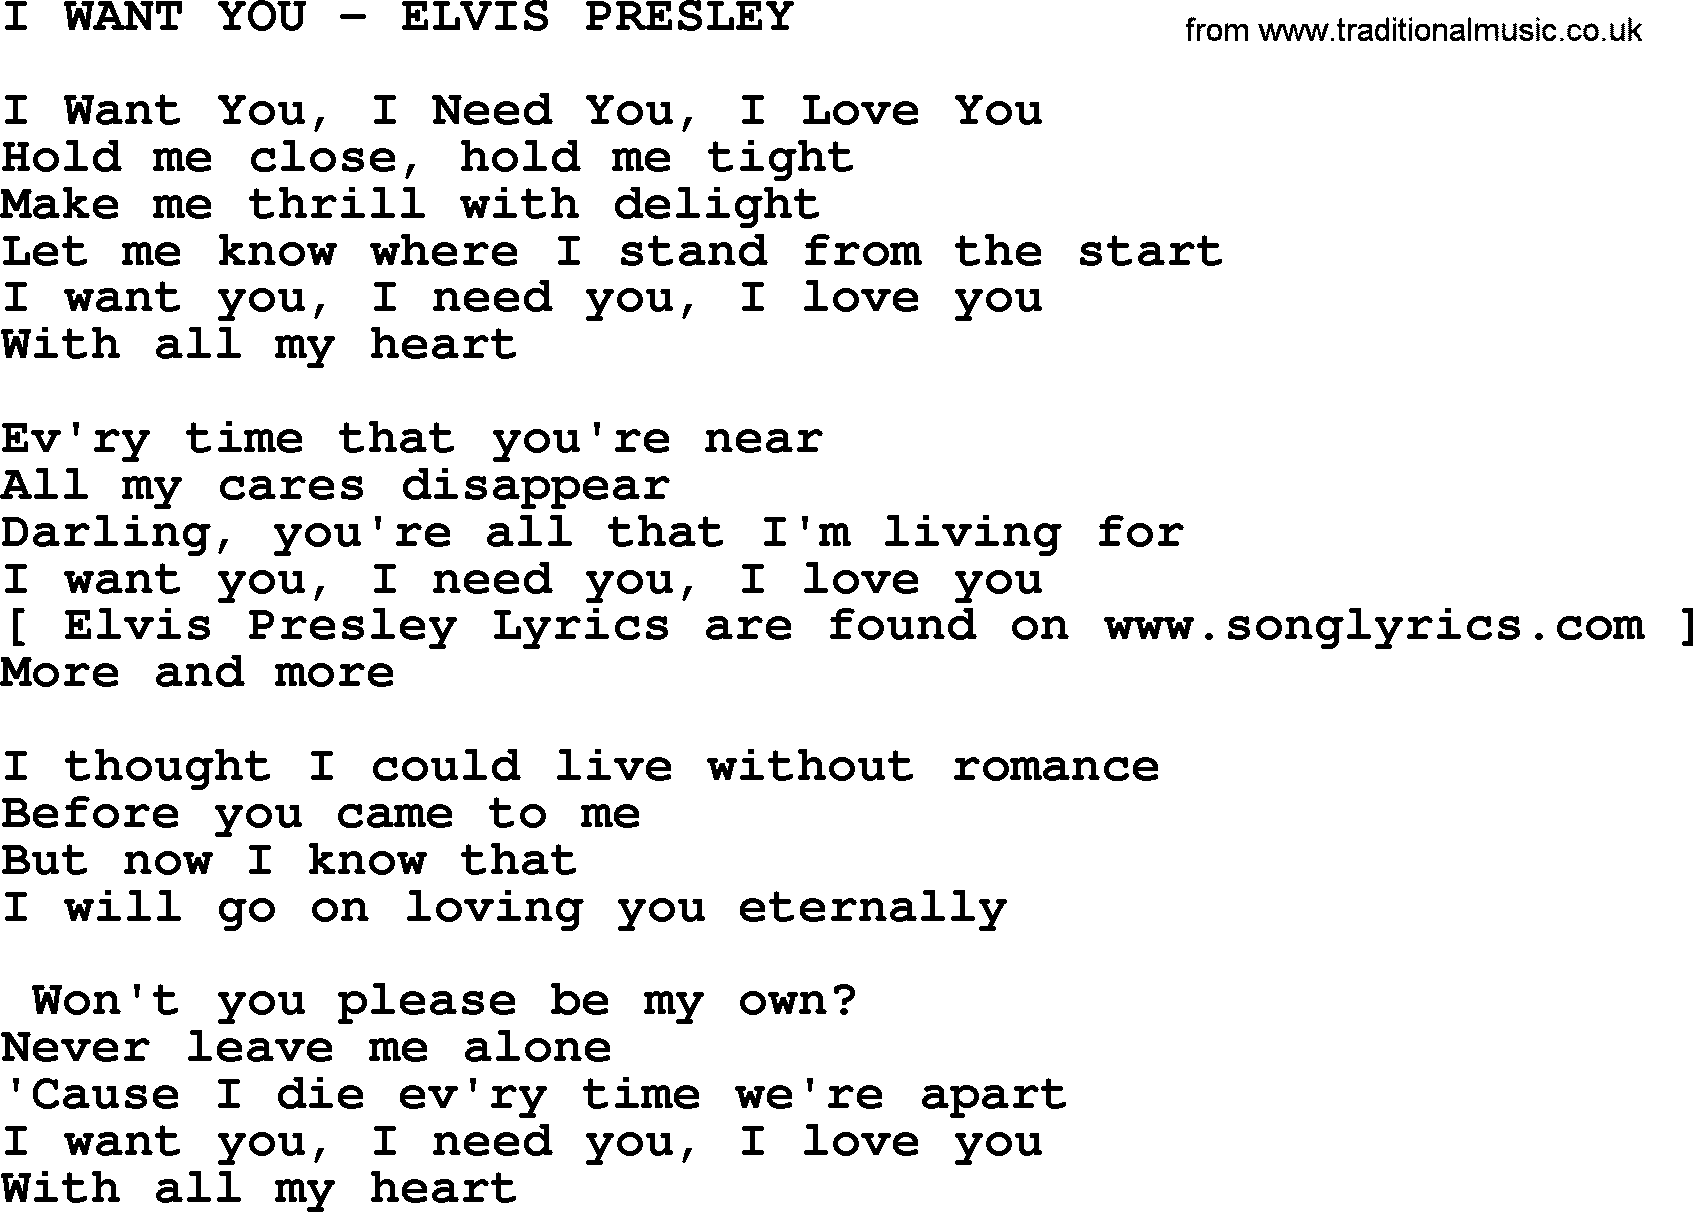 Elvis Presley song: I Want You-Elvis Presley-.txt lyrics and chords